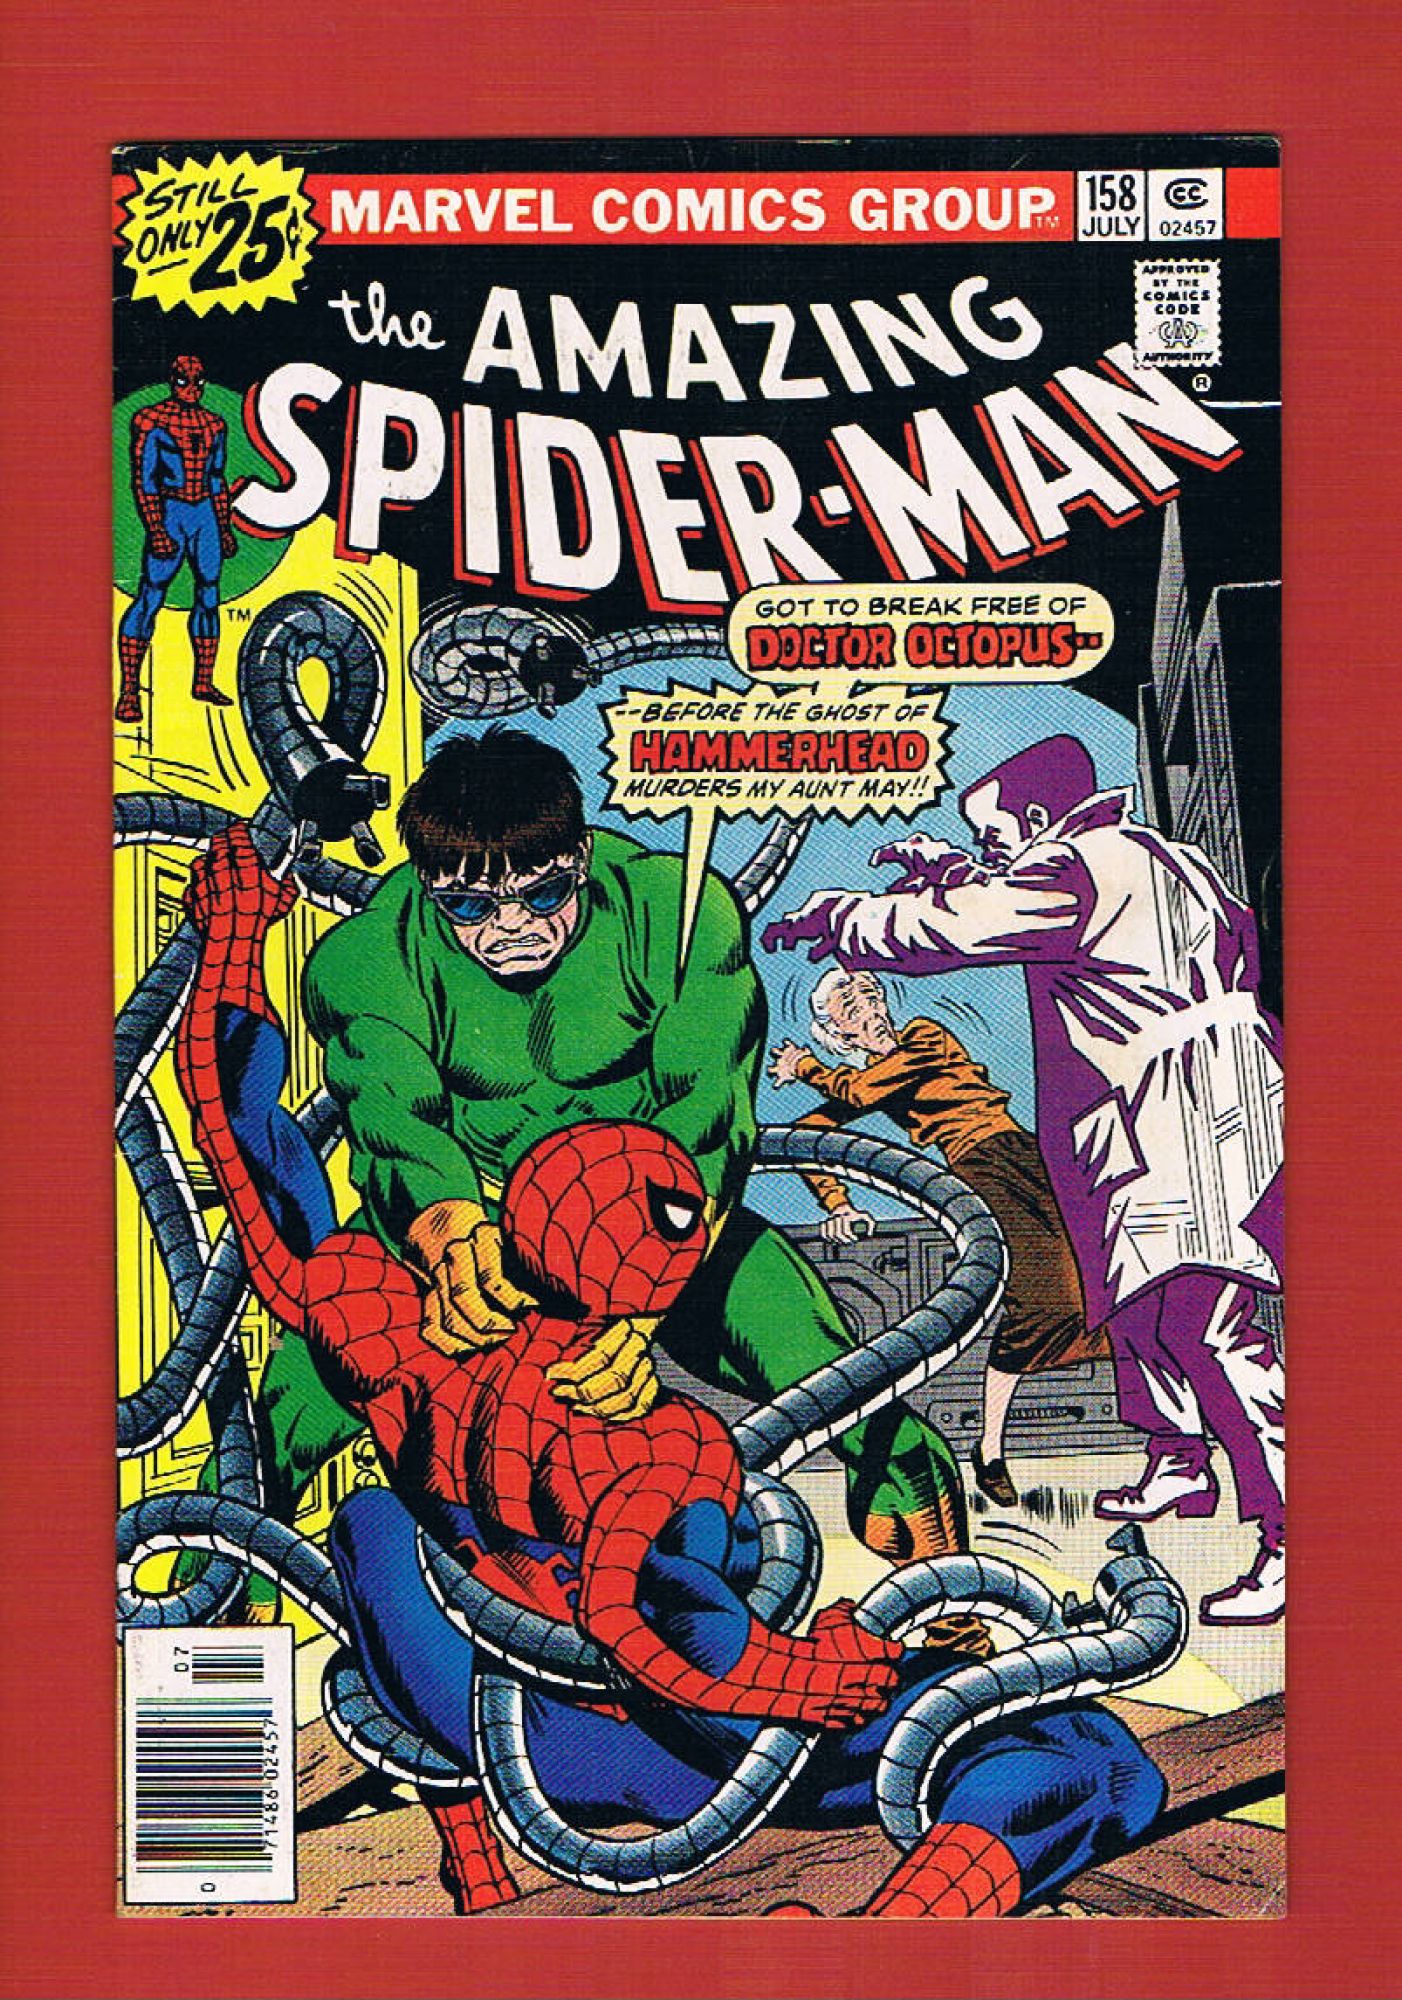 Amazing Spider-Man #158, Jul 1976, 7.0 FN/VF